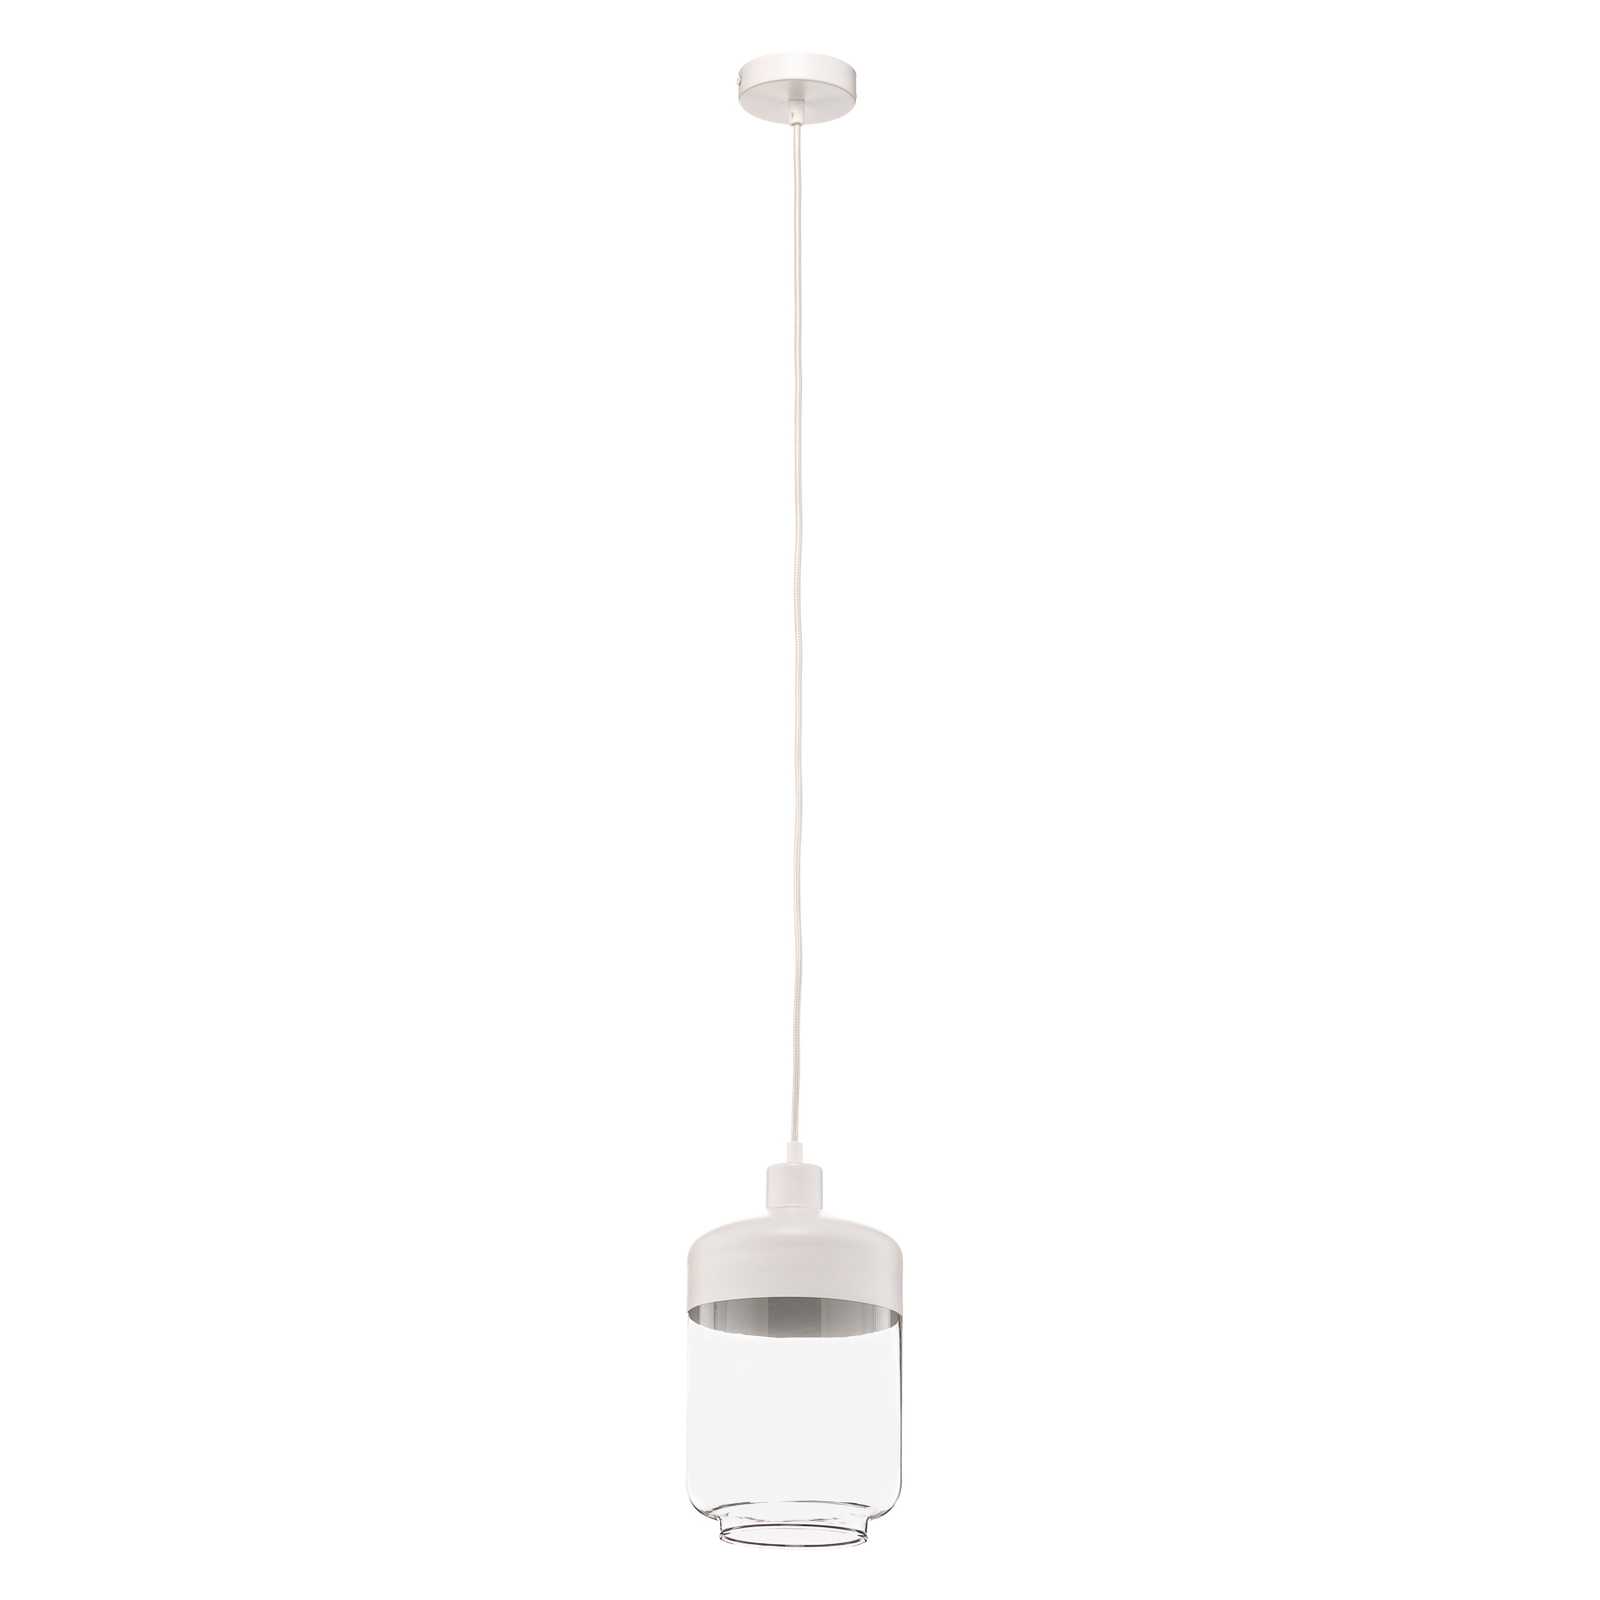 Hanglamp Monochrome Flash helder/wit Ø 17cm